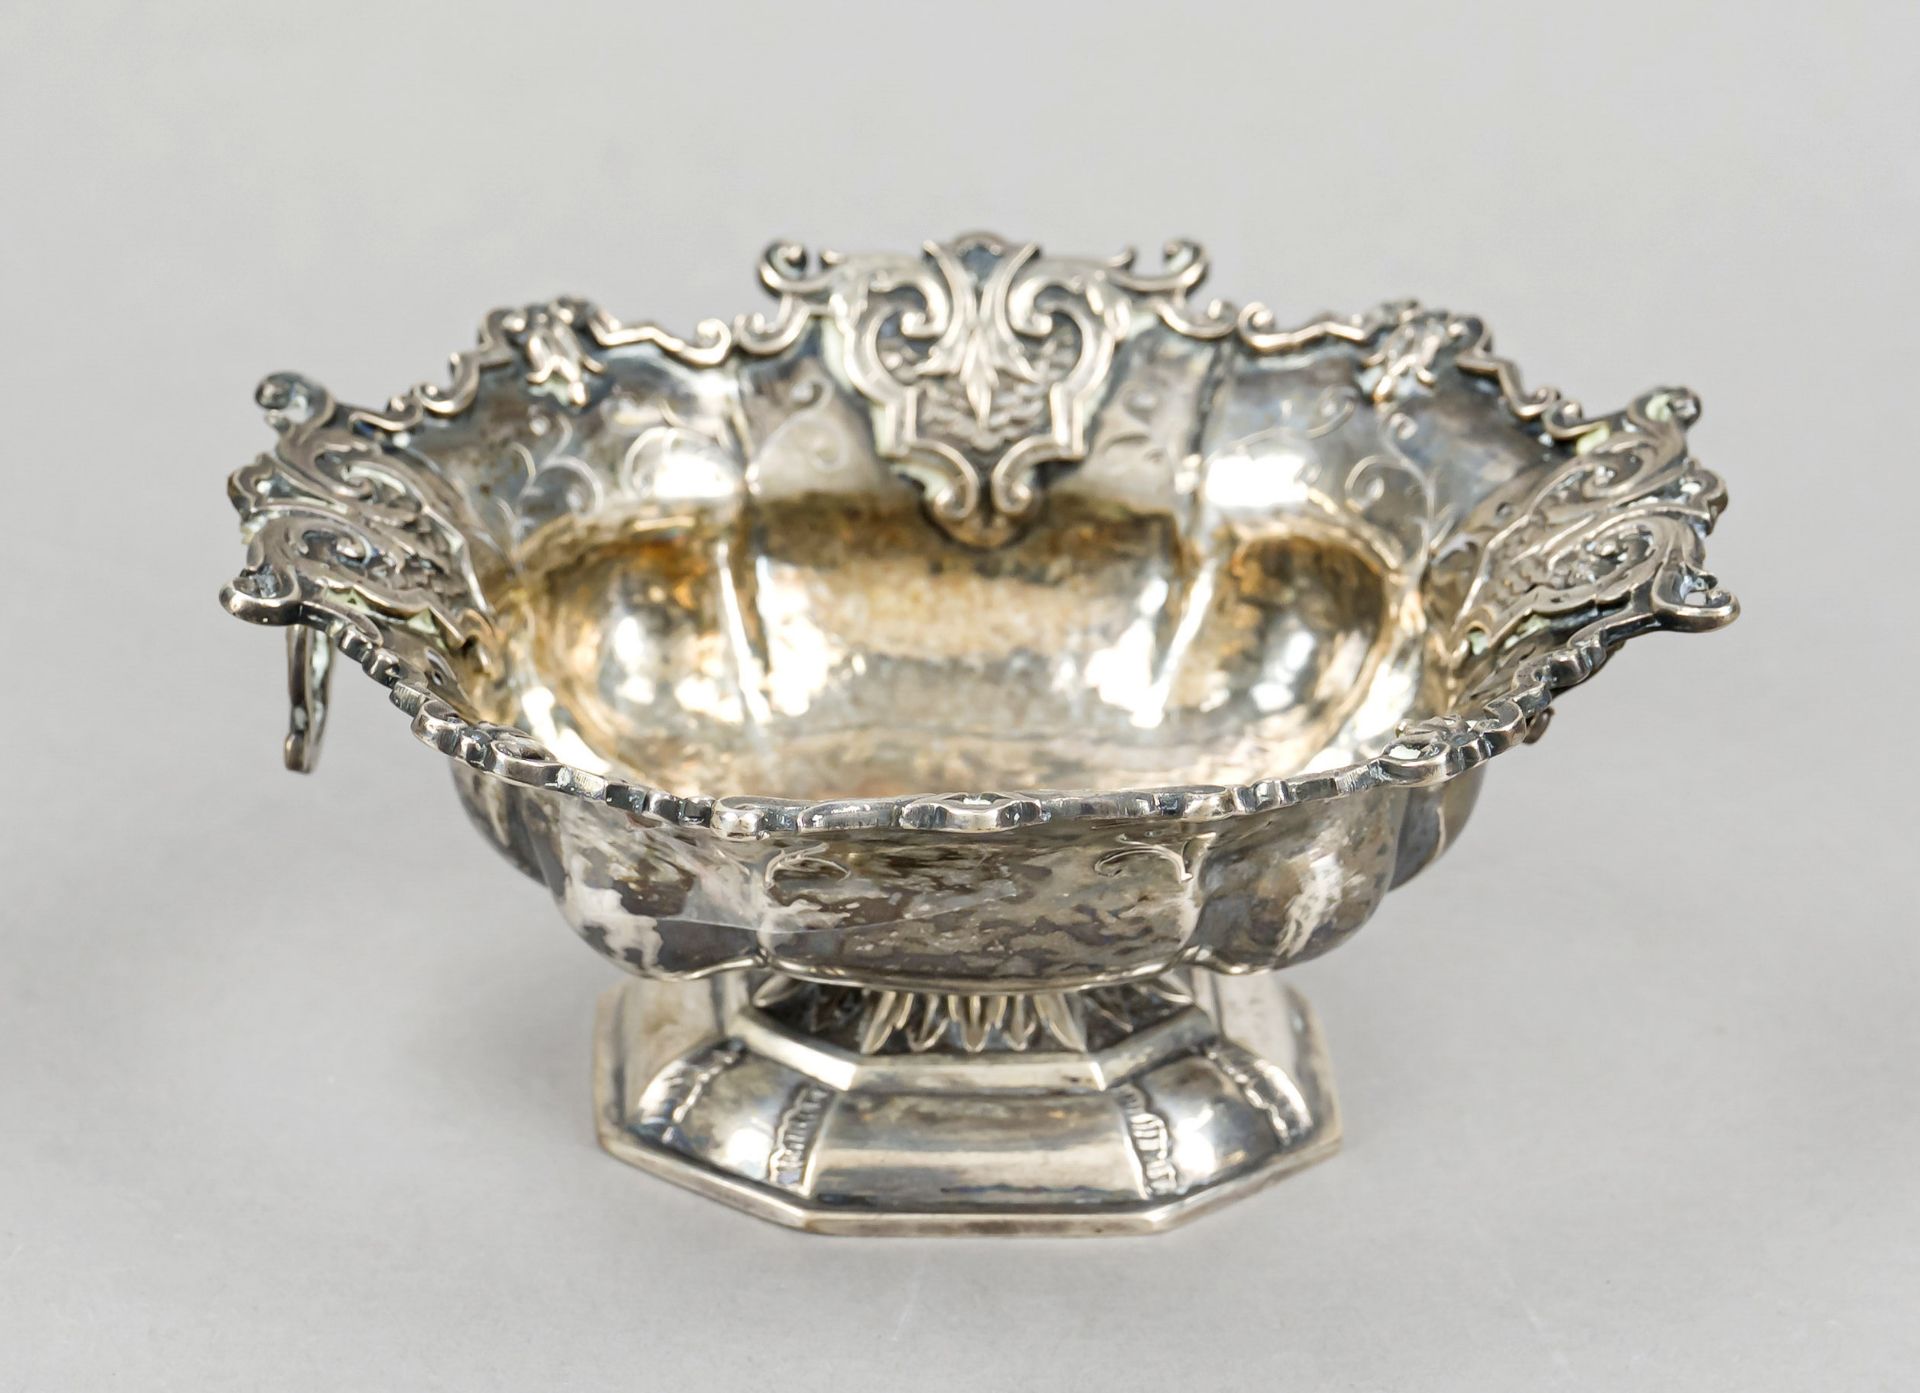 An oval bowl, hallmarked Austria, 18th century, MZ, silver 13 solder (812.5/000), octagonal domed